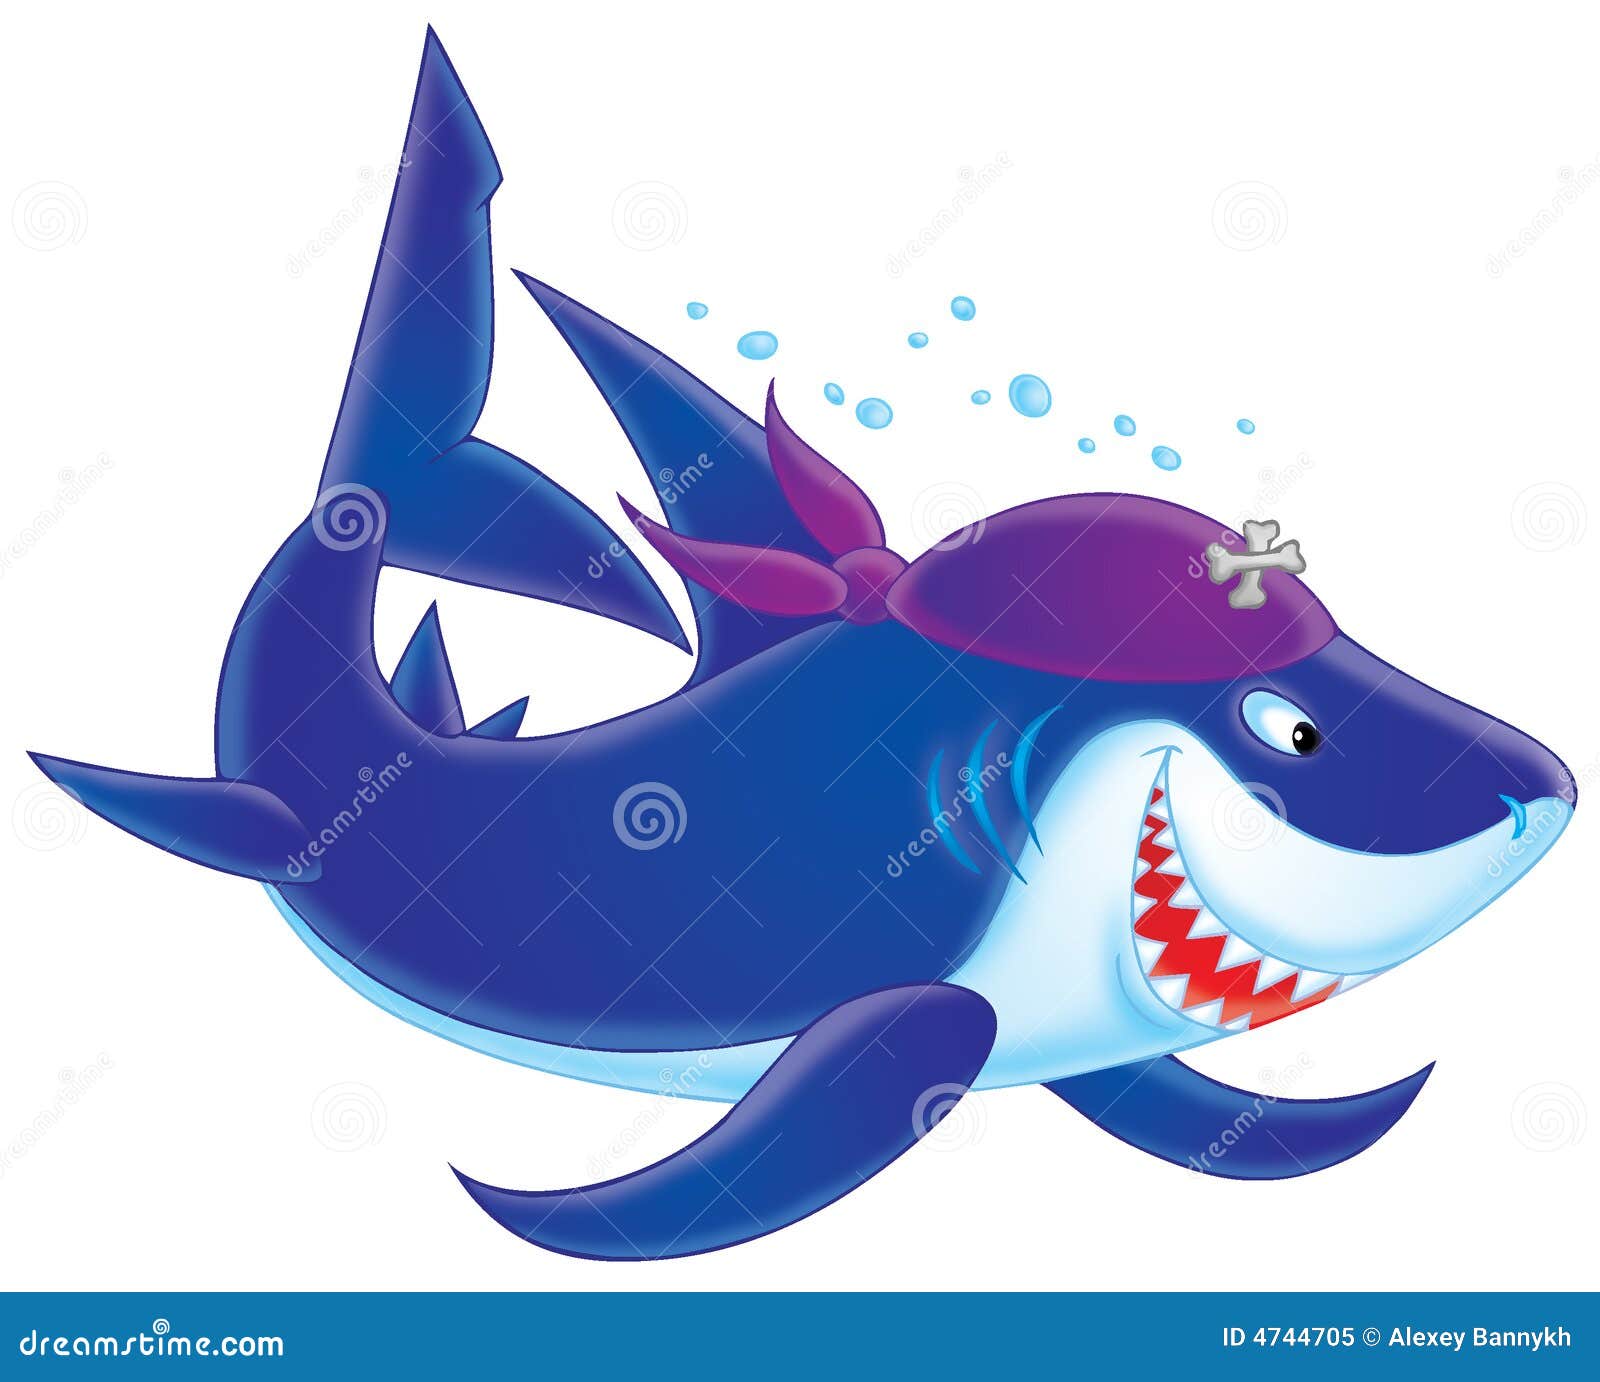 art clip illustration pirate requin